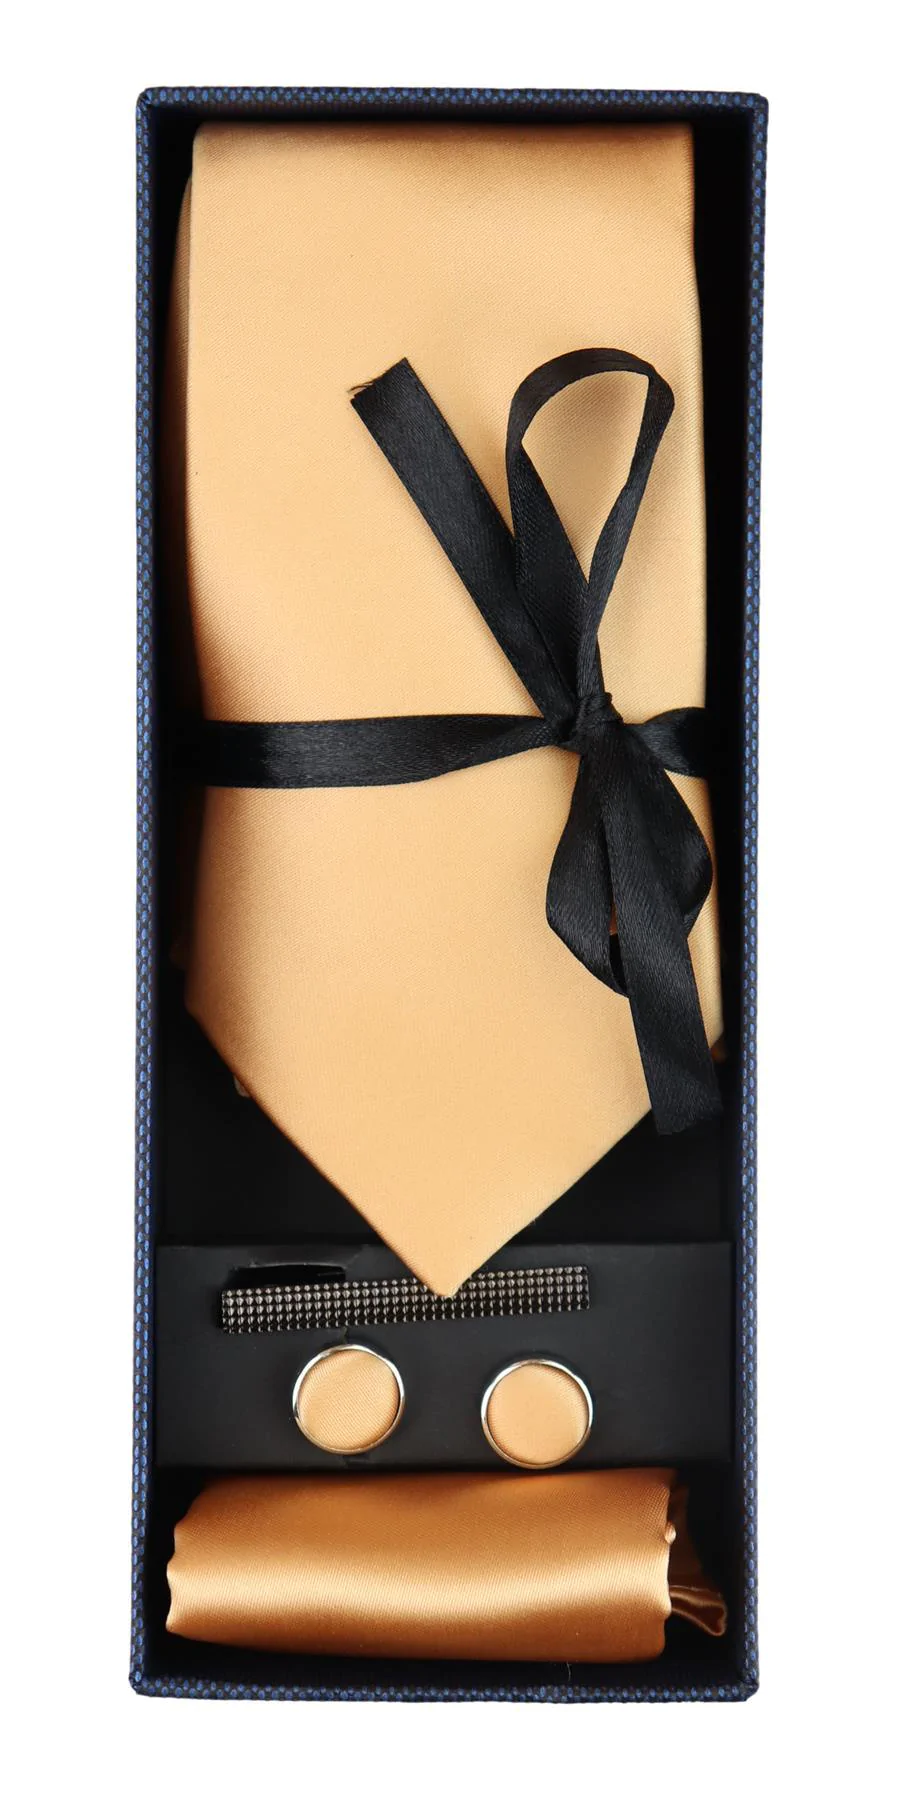 Satin Silk Gold Tie Gift Set Pocket Square Cuff Links Tie Shiny Satin